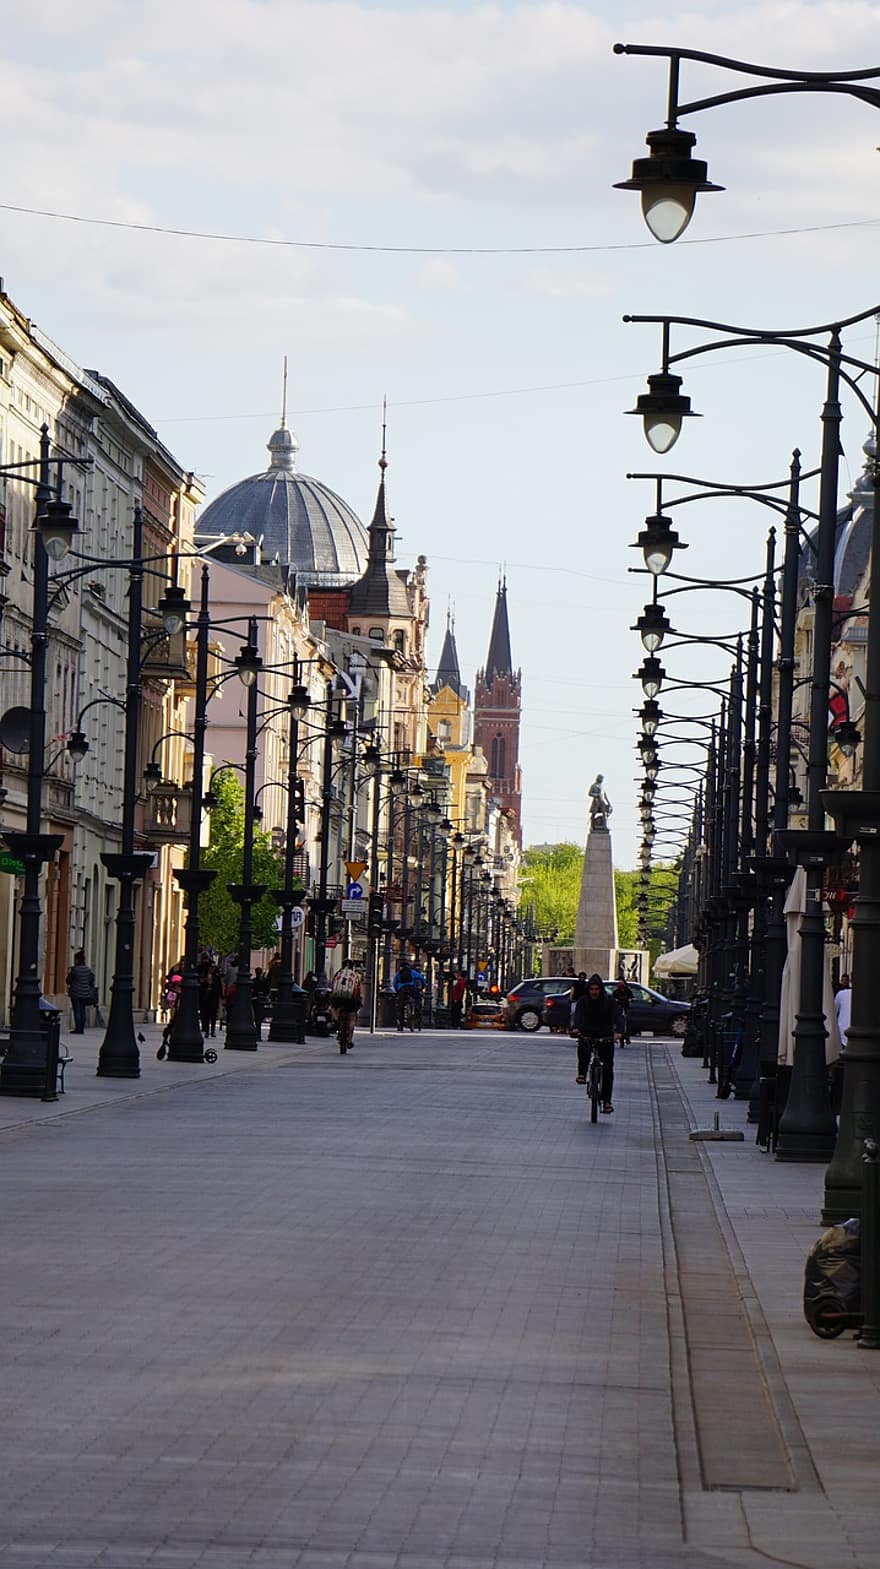 Piotrkowska, gata, stad, gatubelysning, gatlyktor, cyklist, människor, pendlare, gata fotografering, Łódź, byggnader